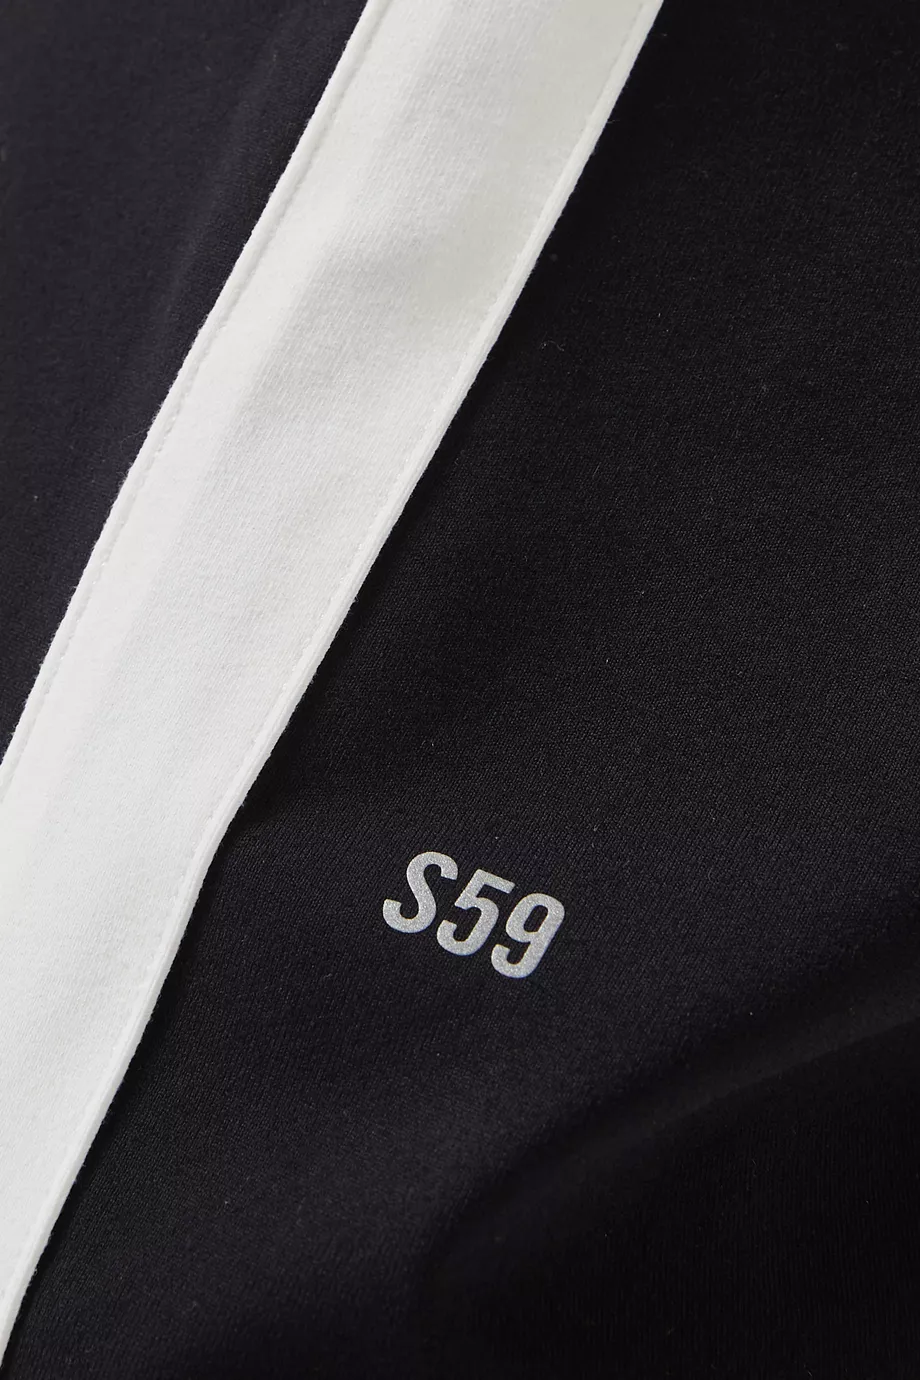 Splits59 Harper Supplex Pant in Black & White